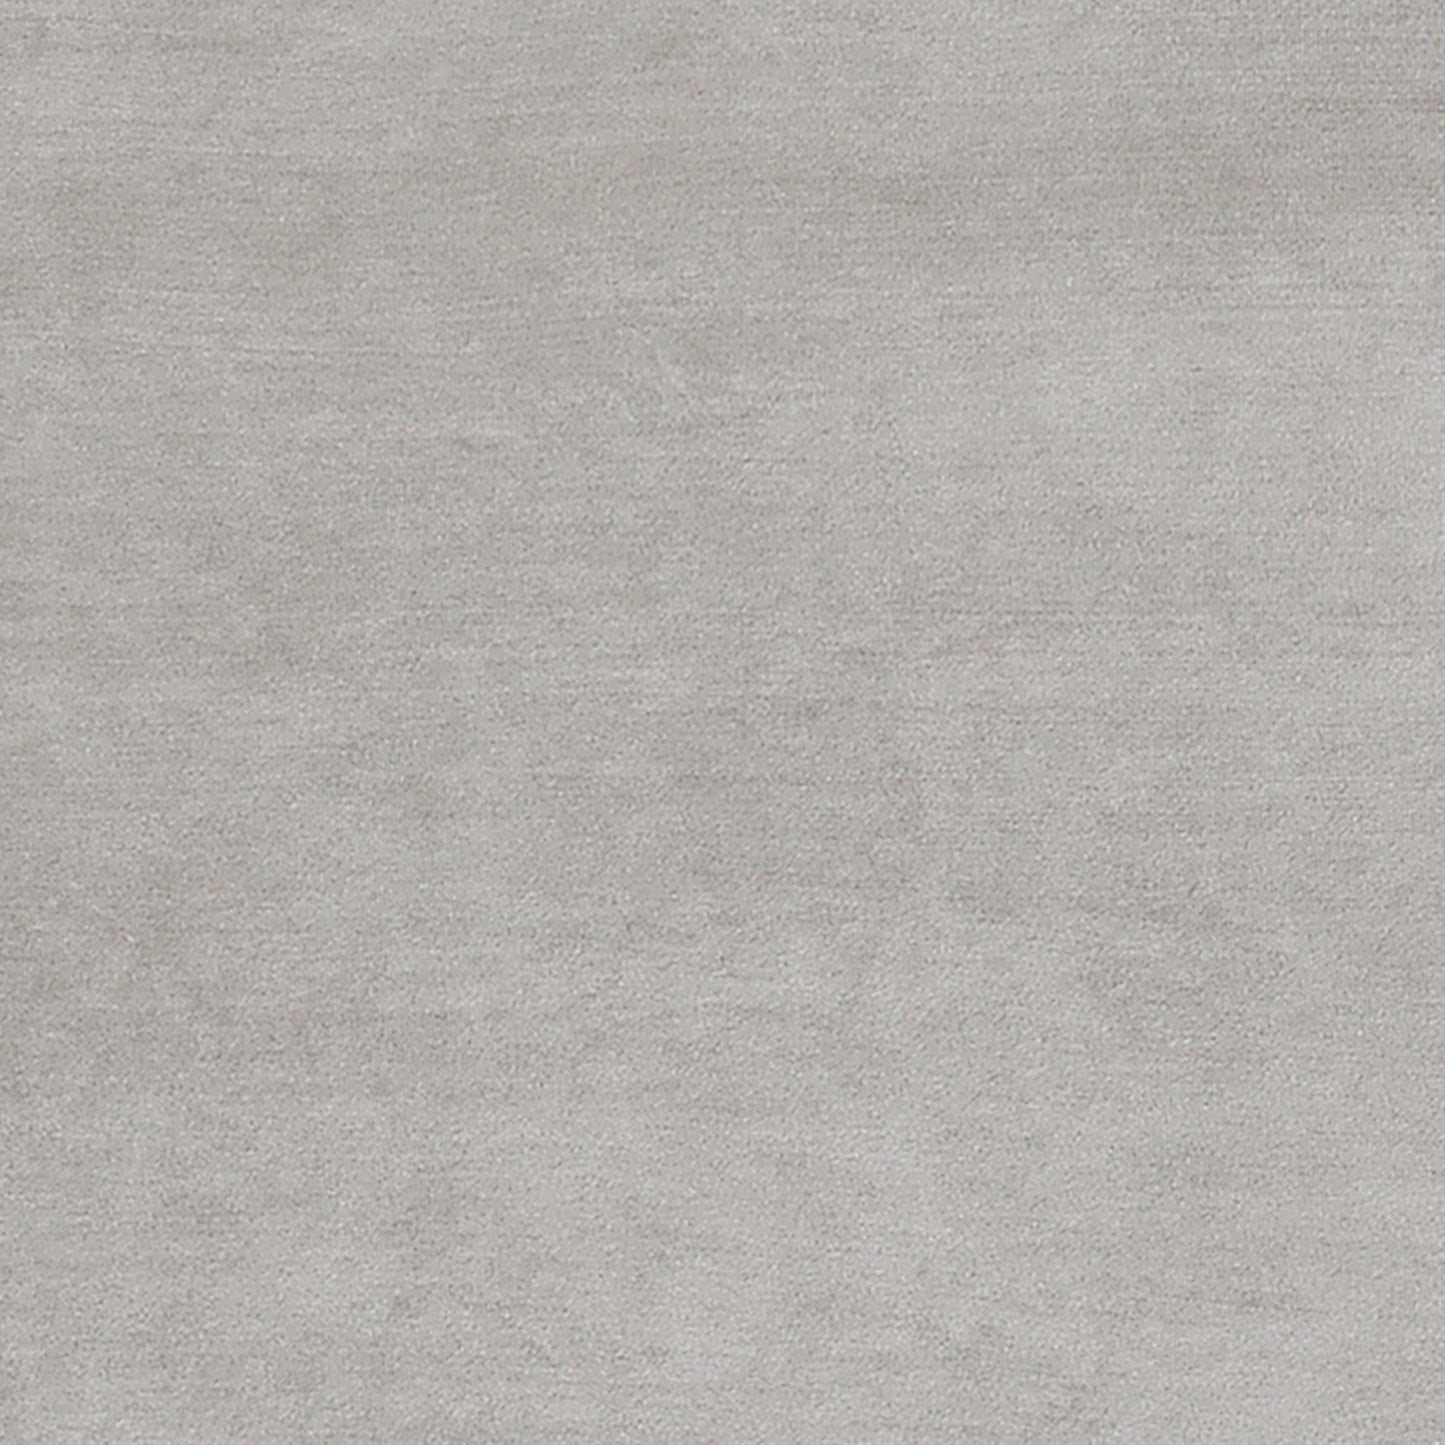 Avonlea 3-piece Tufted Living Room Set Grey